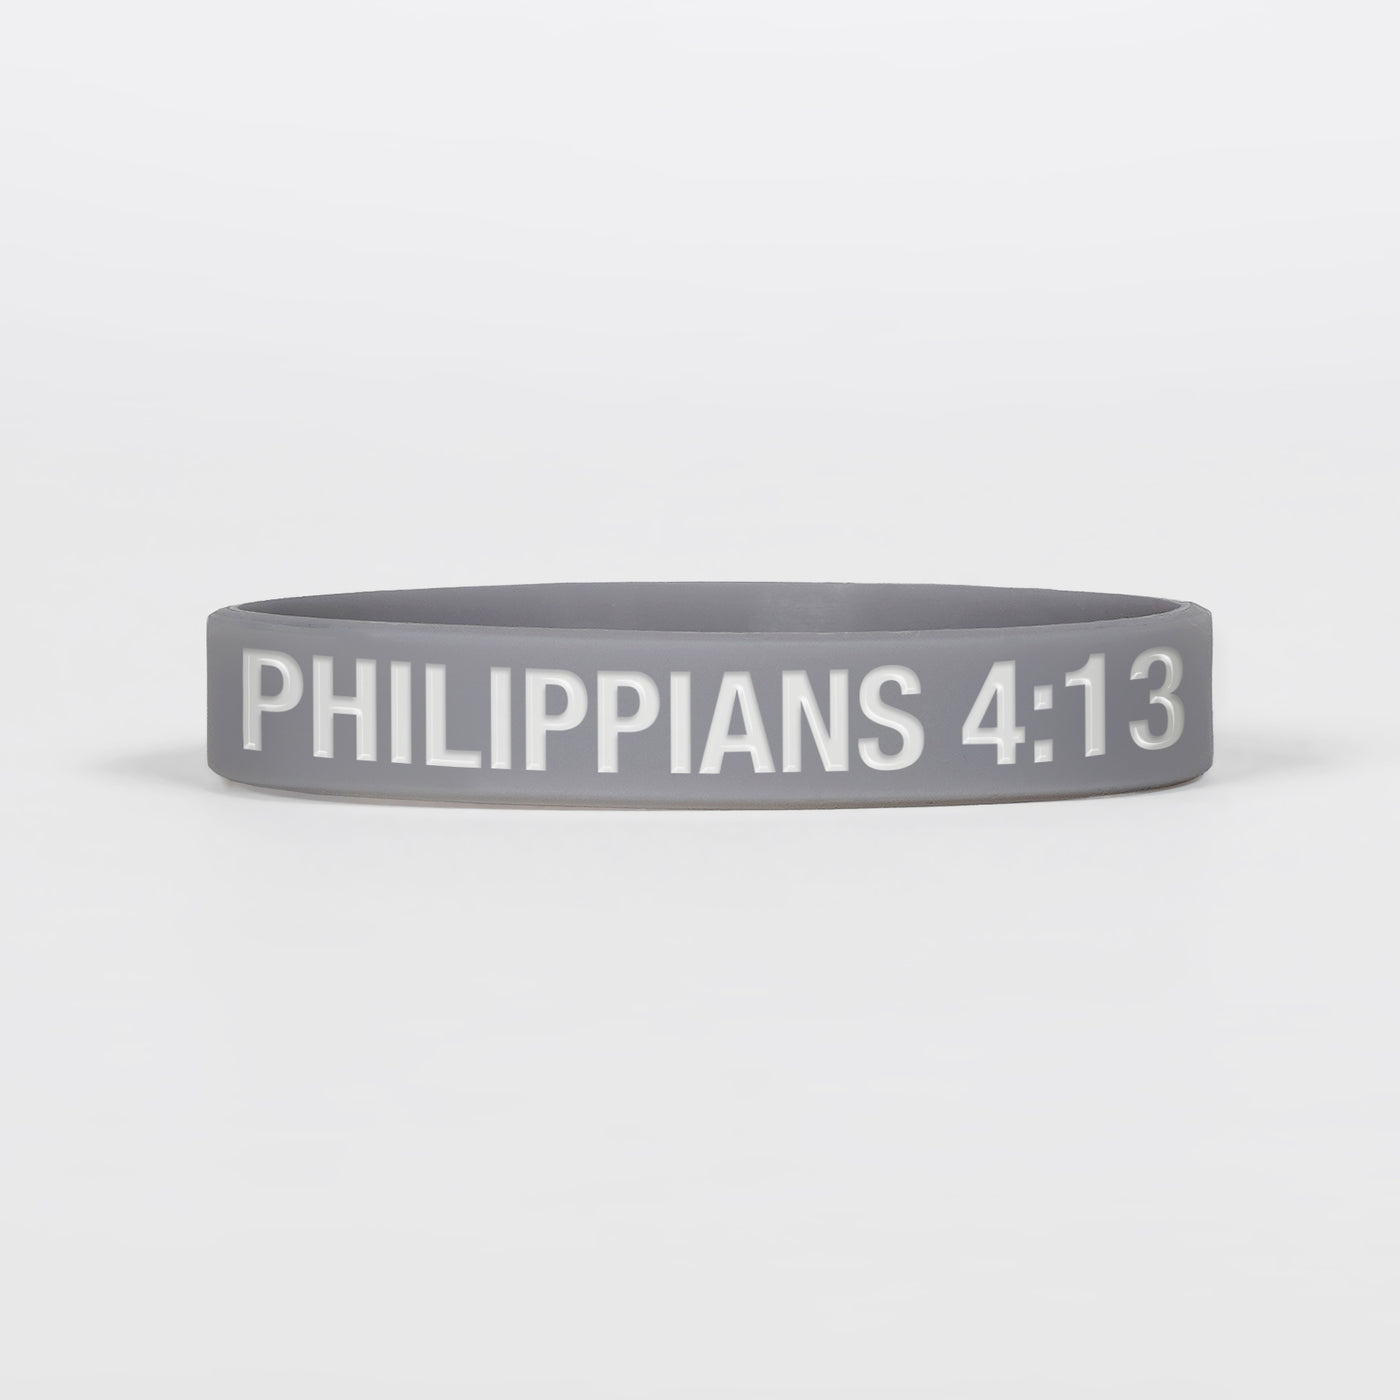 Philippians 4:13 Motivational Wristband